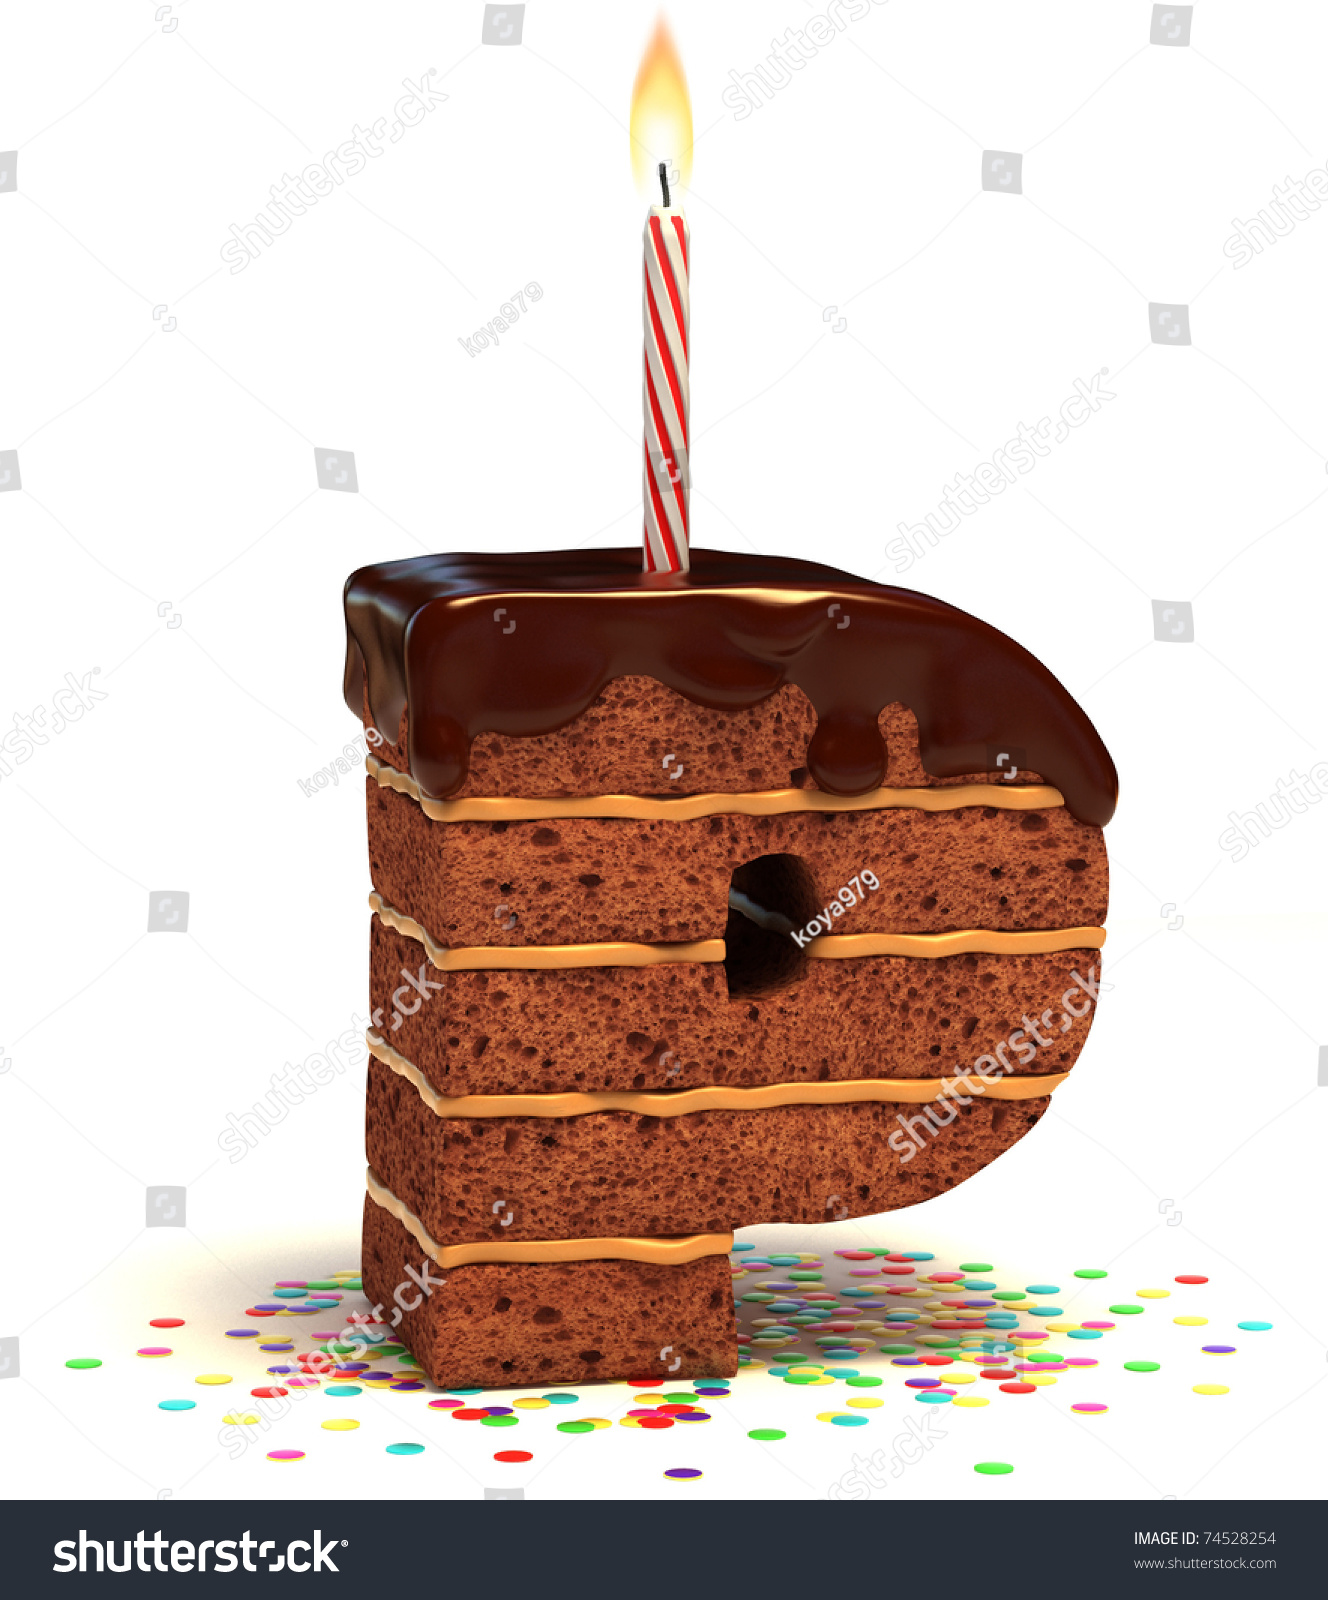 Letter P Shaped Chocolate Birthday Cake Stock Illustration 74528254 - Shutterstock